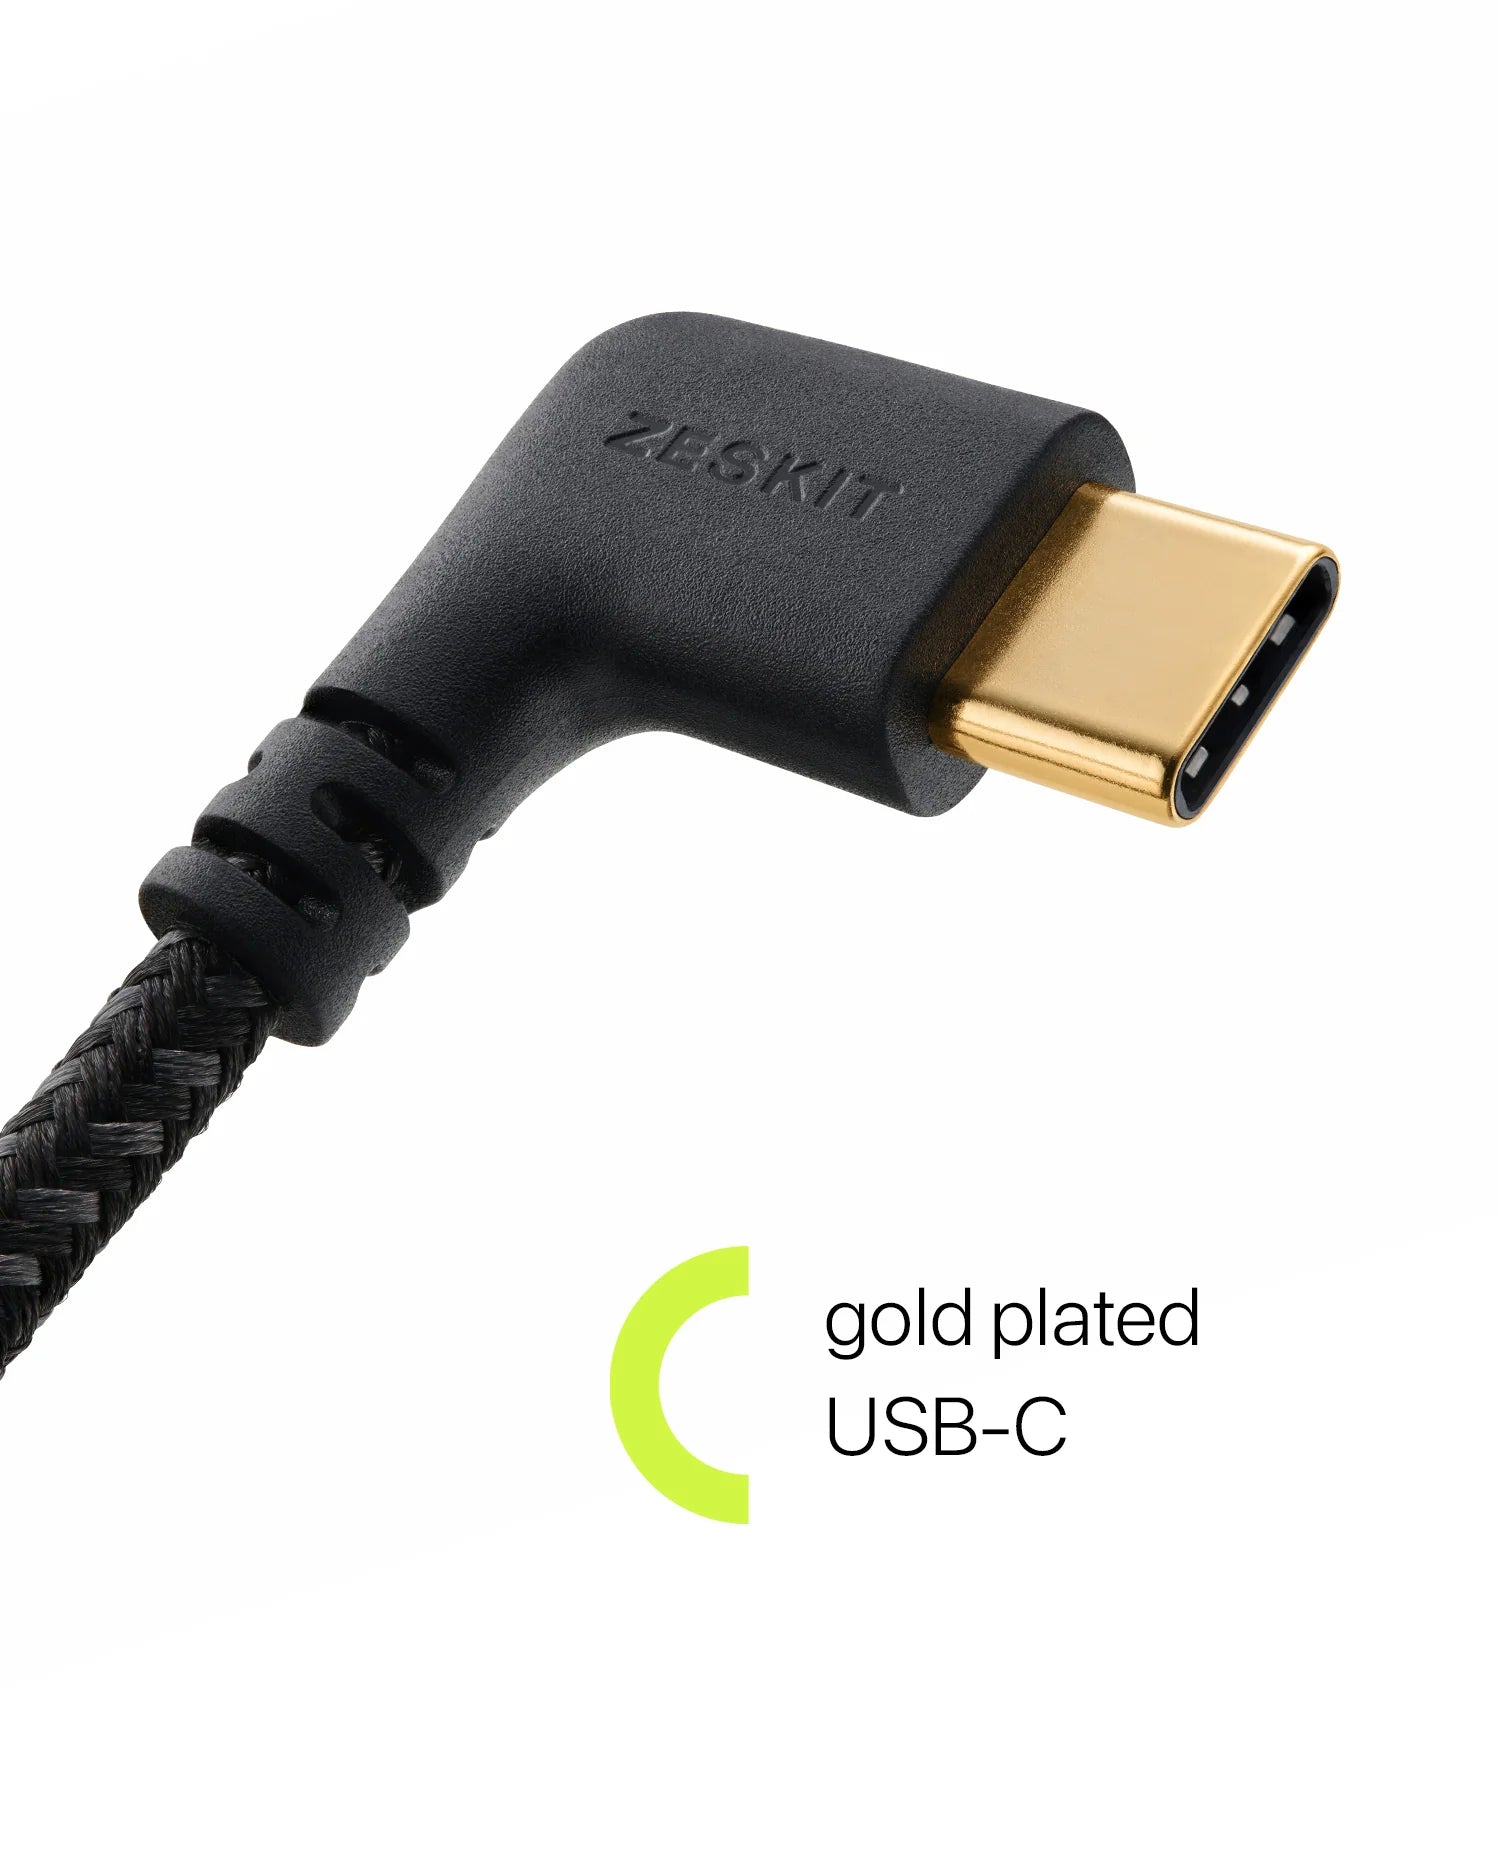 Zeskit Lightning to USB-C MFi 認證 90度傳輸線